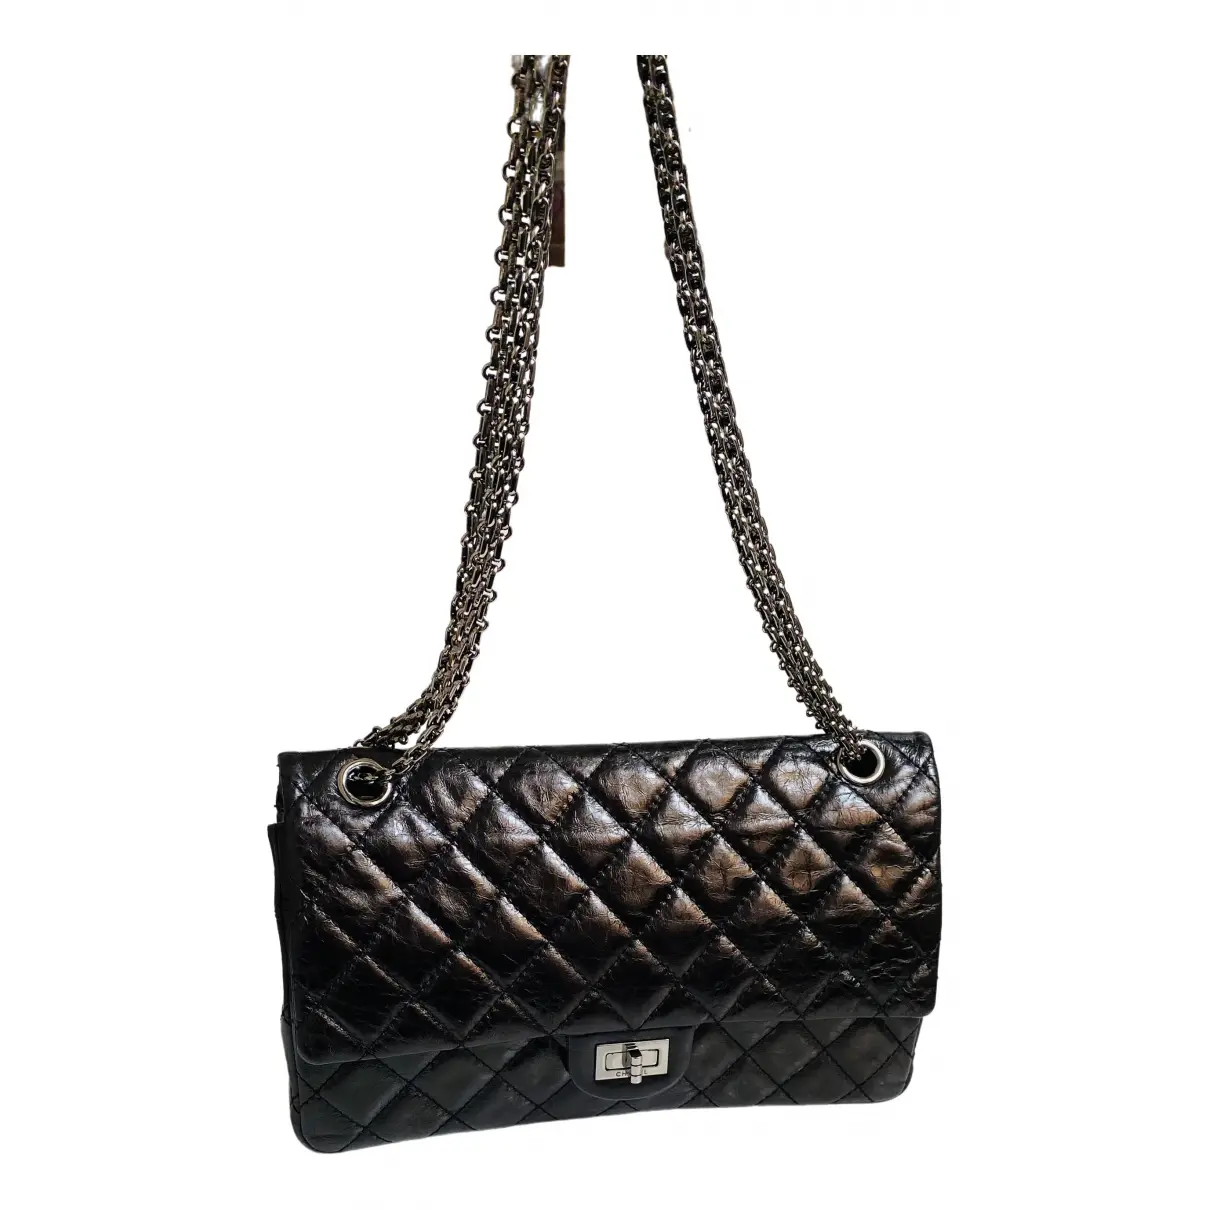 2.55 leather crossbody bag Chanel - Vintage